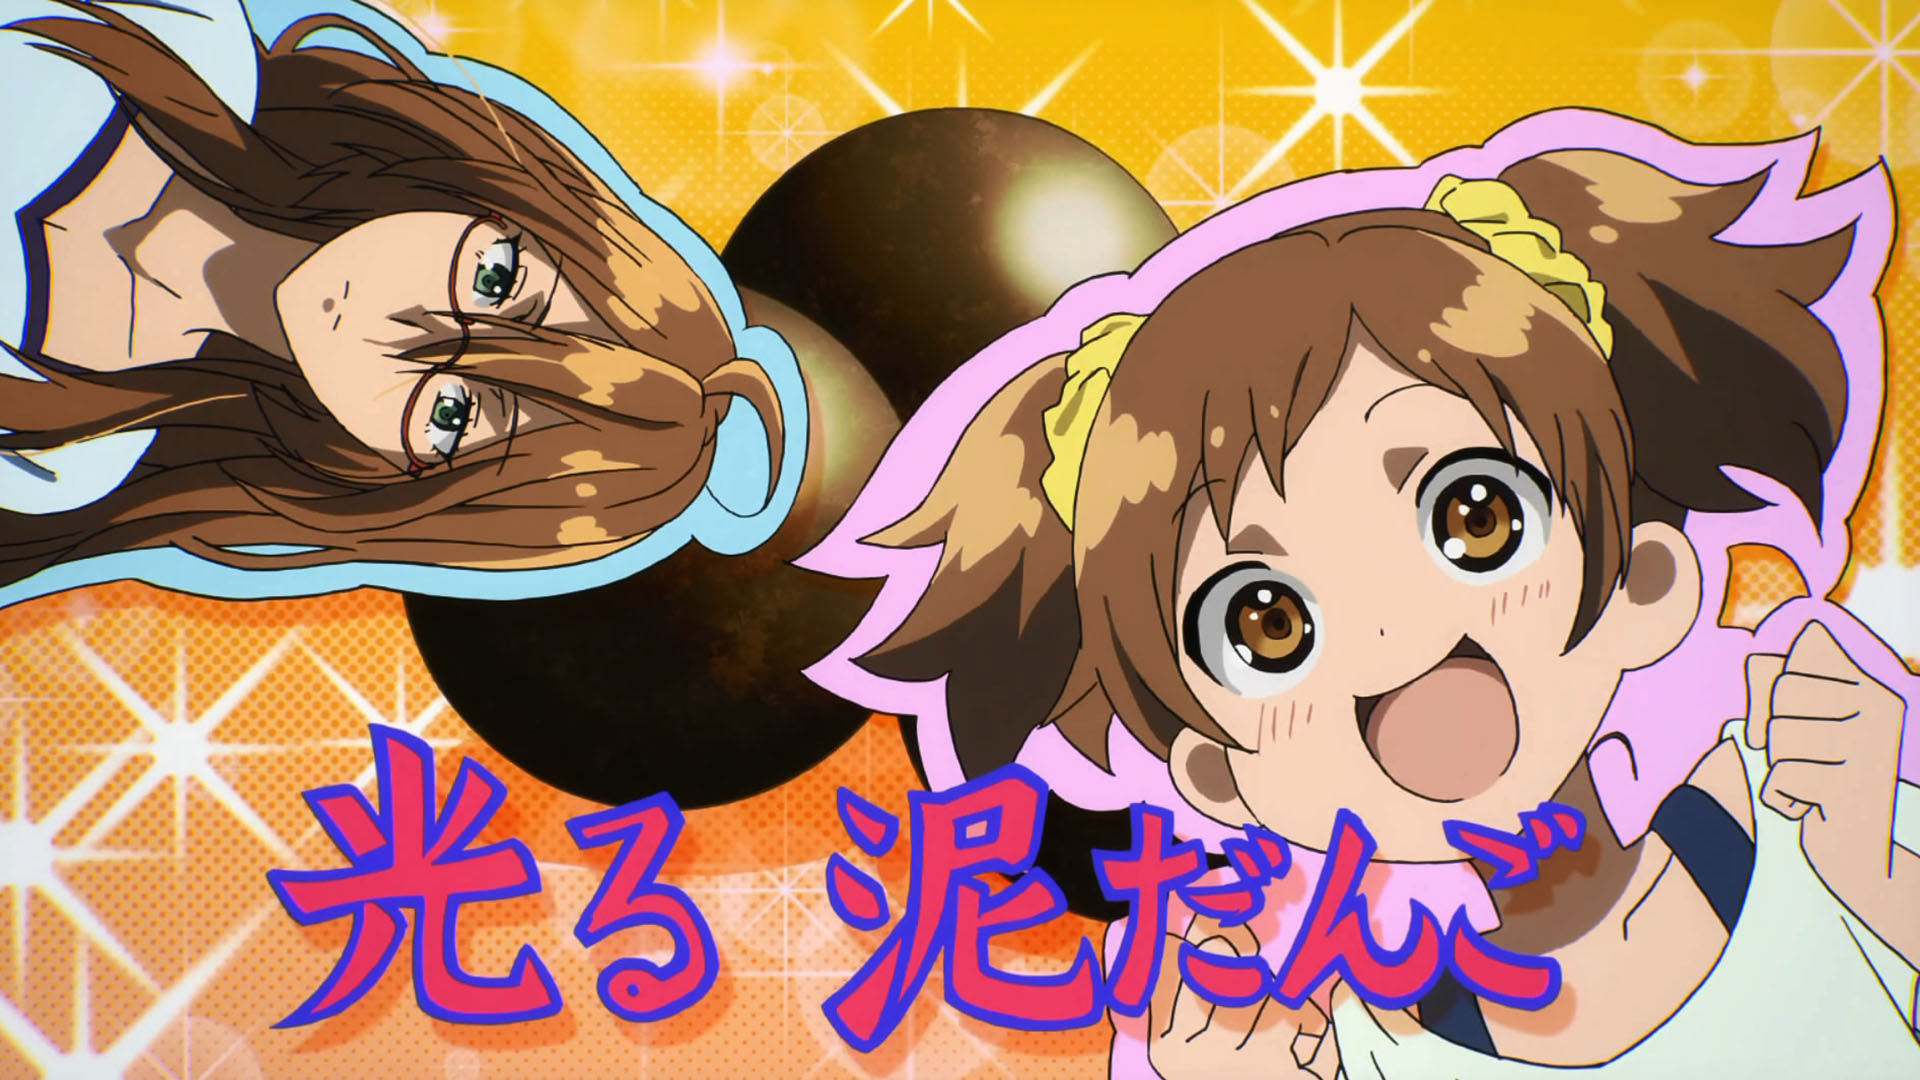 Bokura wa Minna Kawaisou Episode 6 Anime Review - Sadist Loli 僕ら